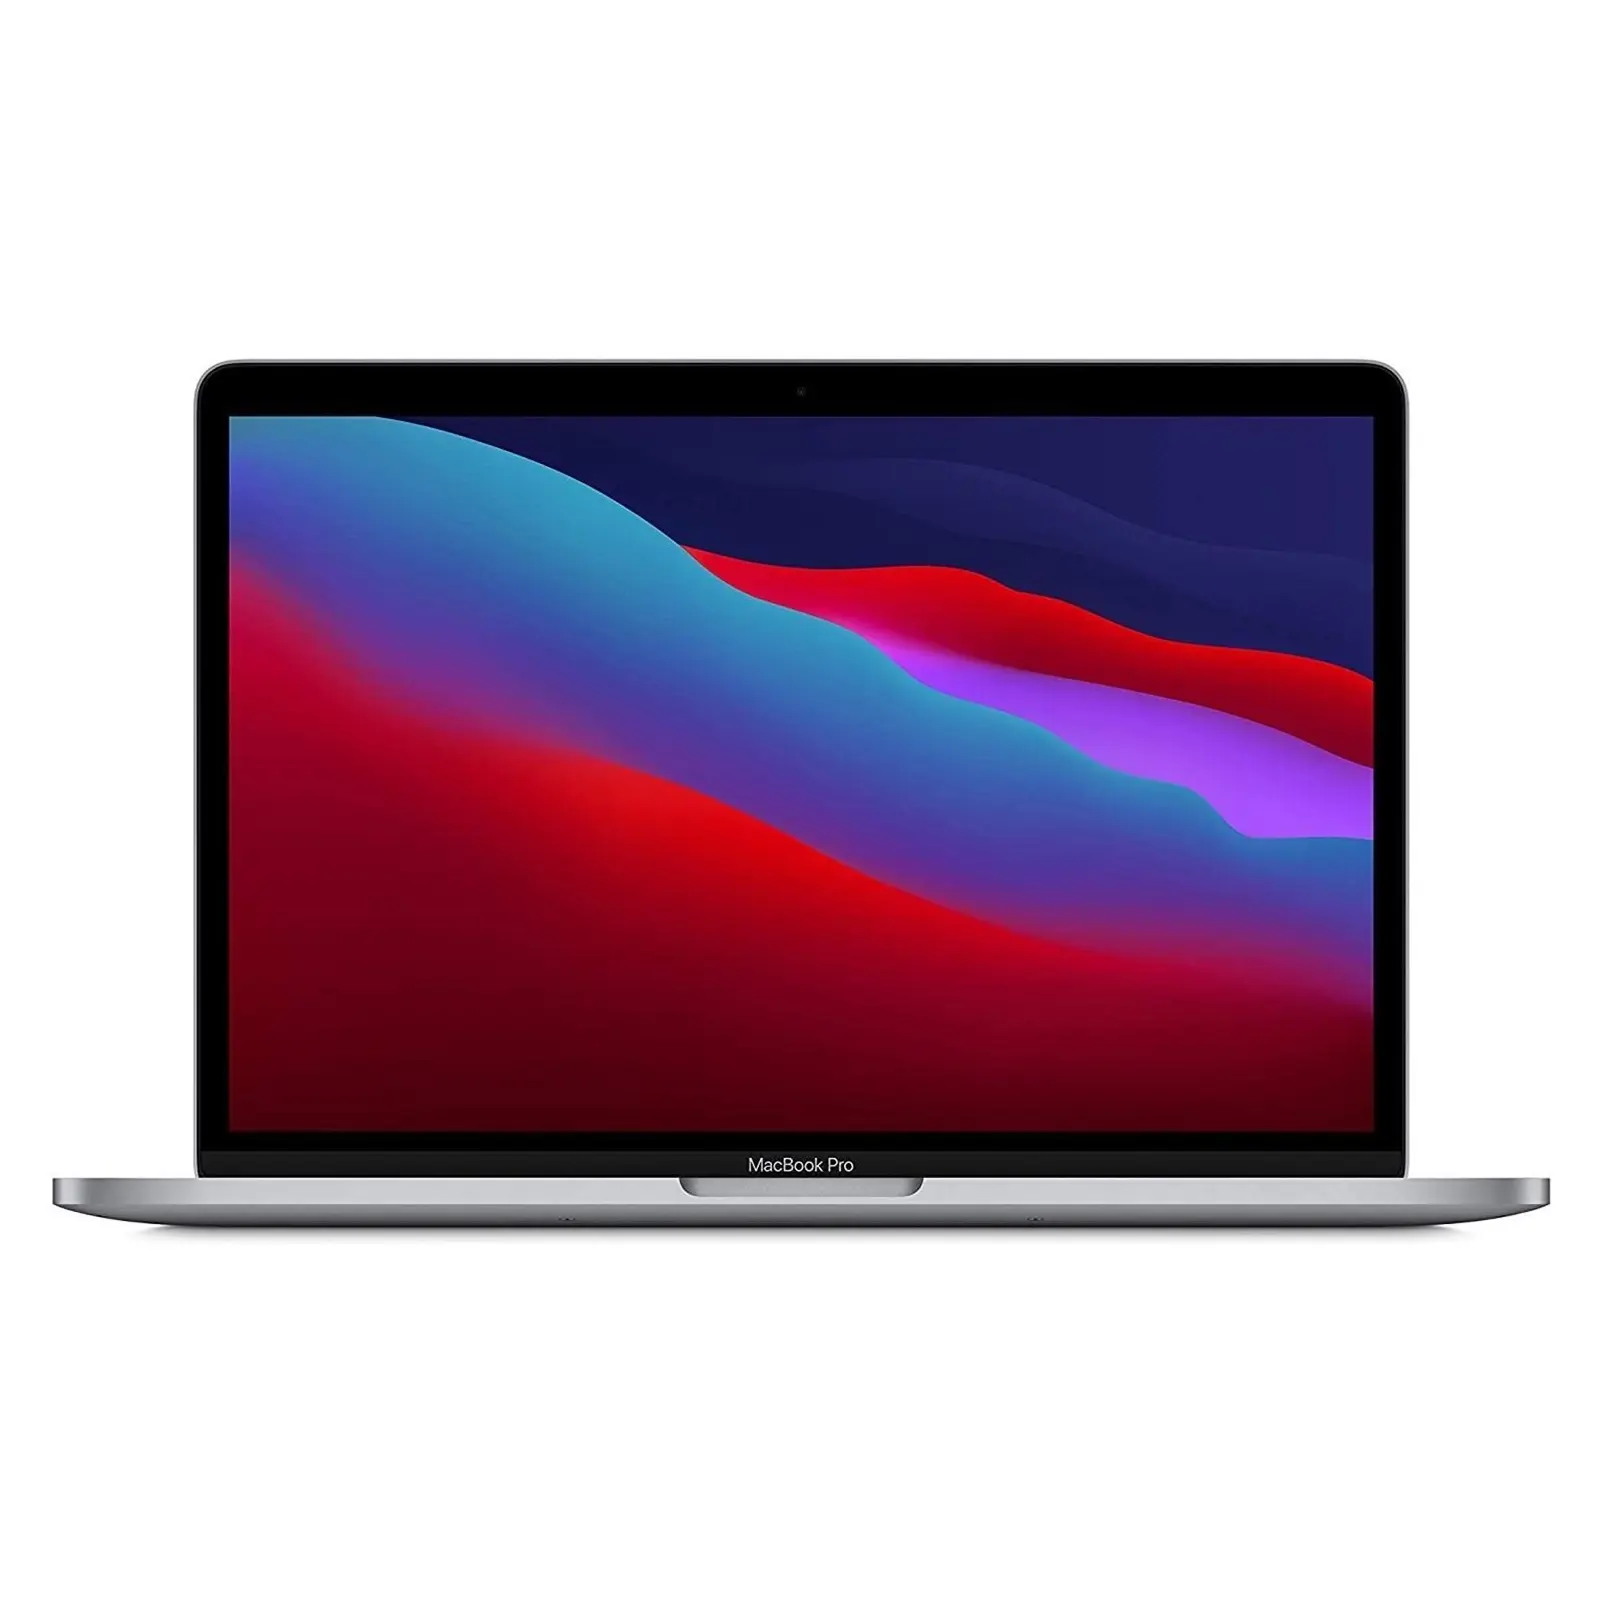 Apple MacBook Pro Laptop, 13 Inch 2560x1600 Retina Display, M1 8-Core Processor, 8GB DDR4 RAM, 256GB SSD, Space Grey